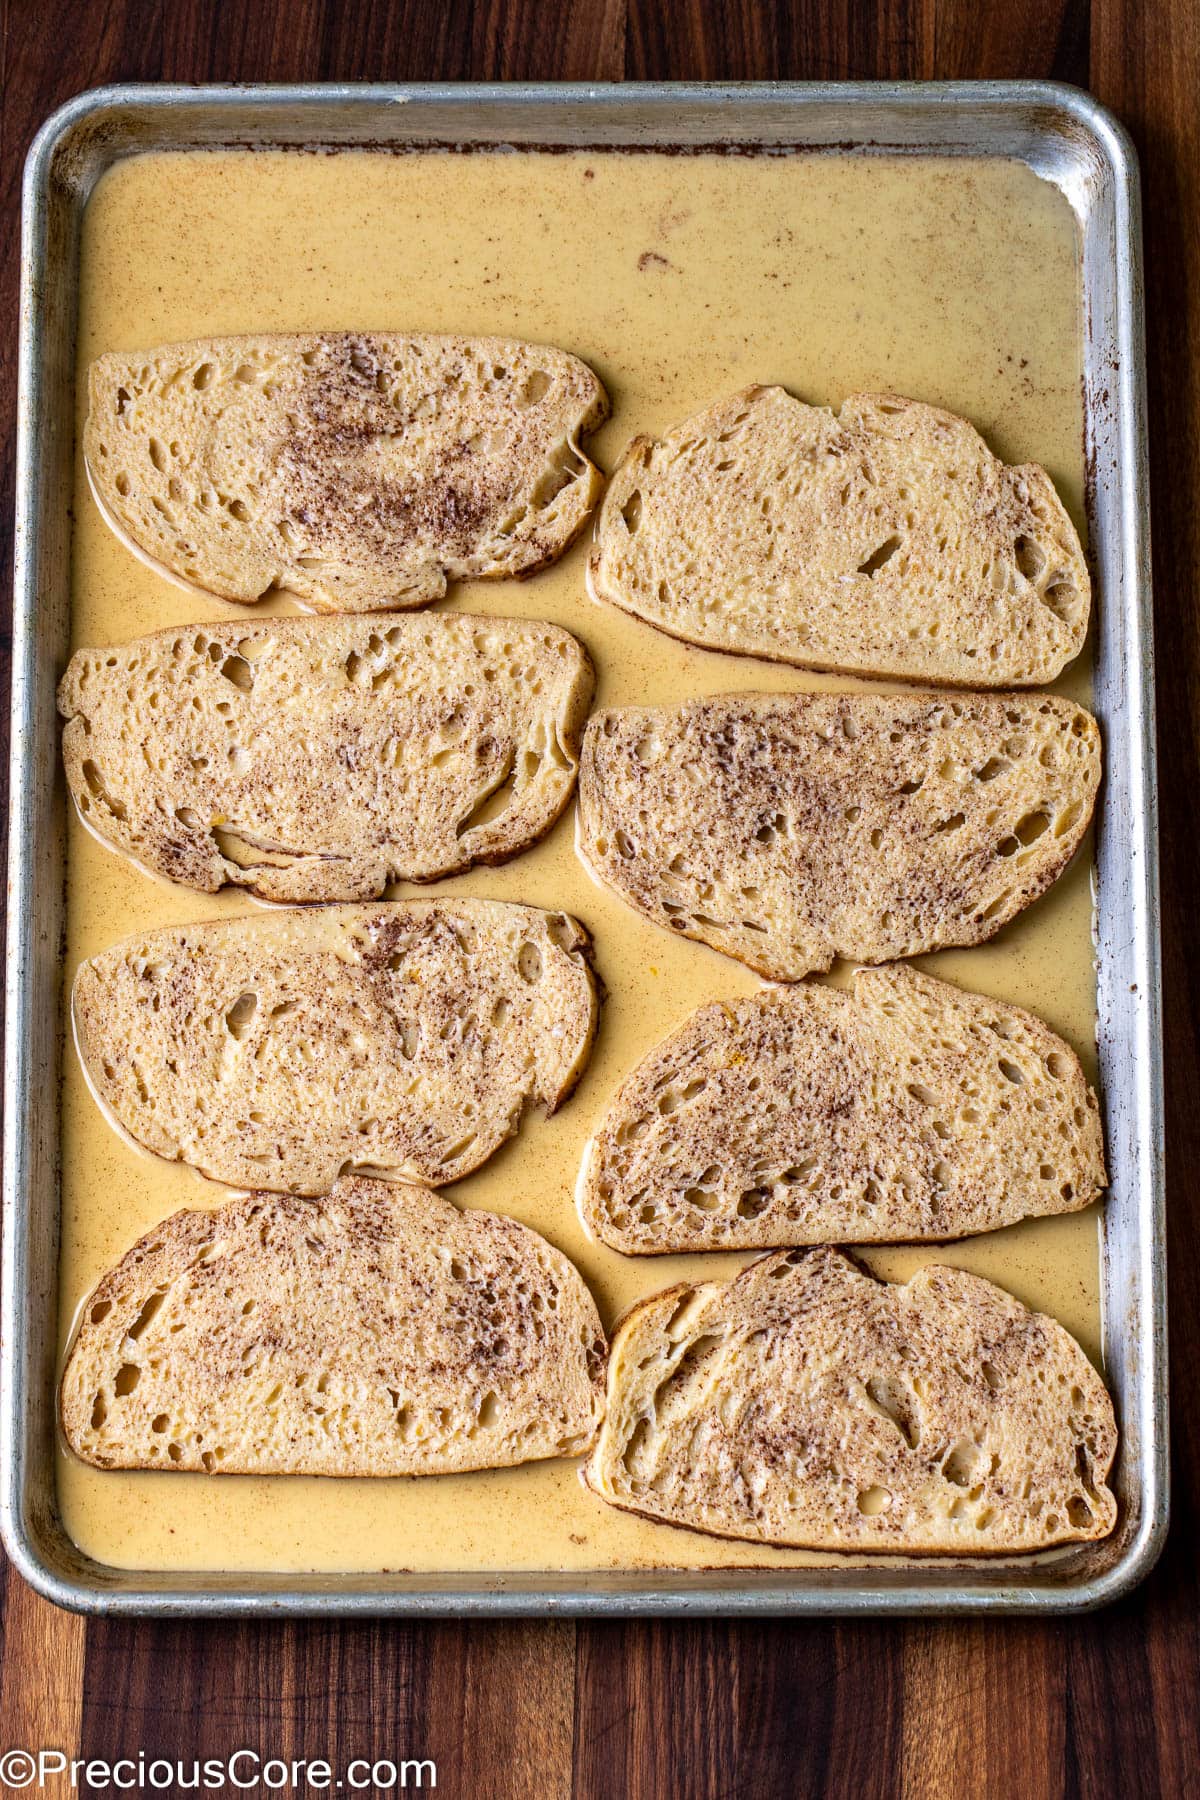 Bread slices soaking in custard on a baking sheet.